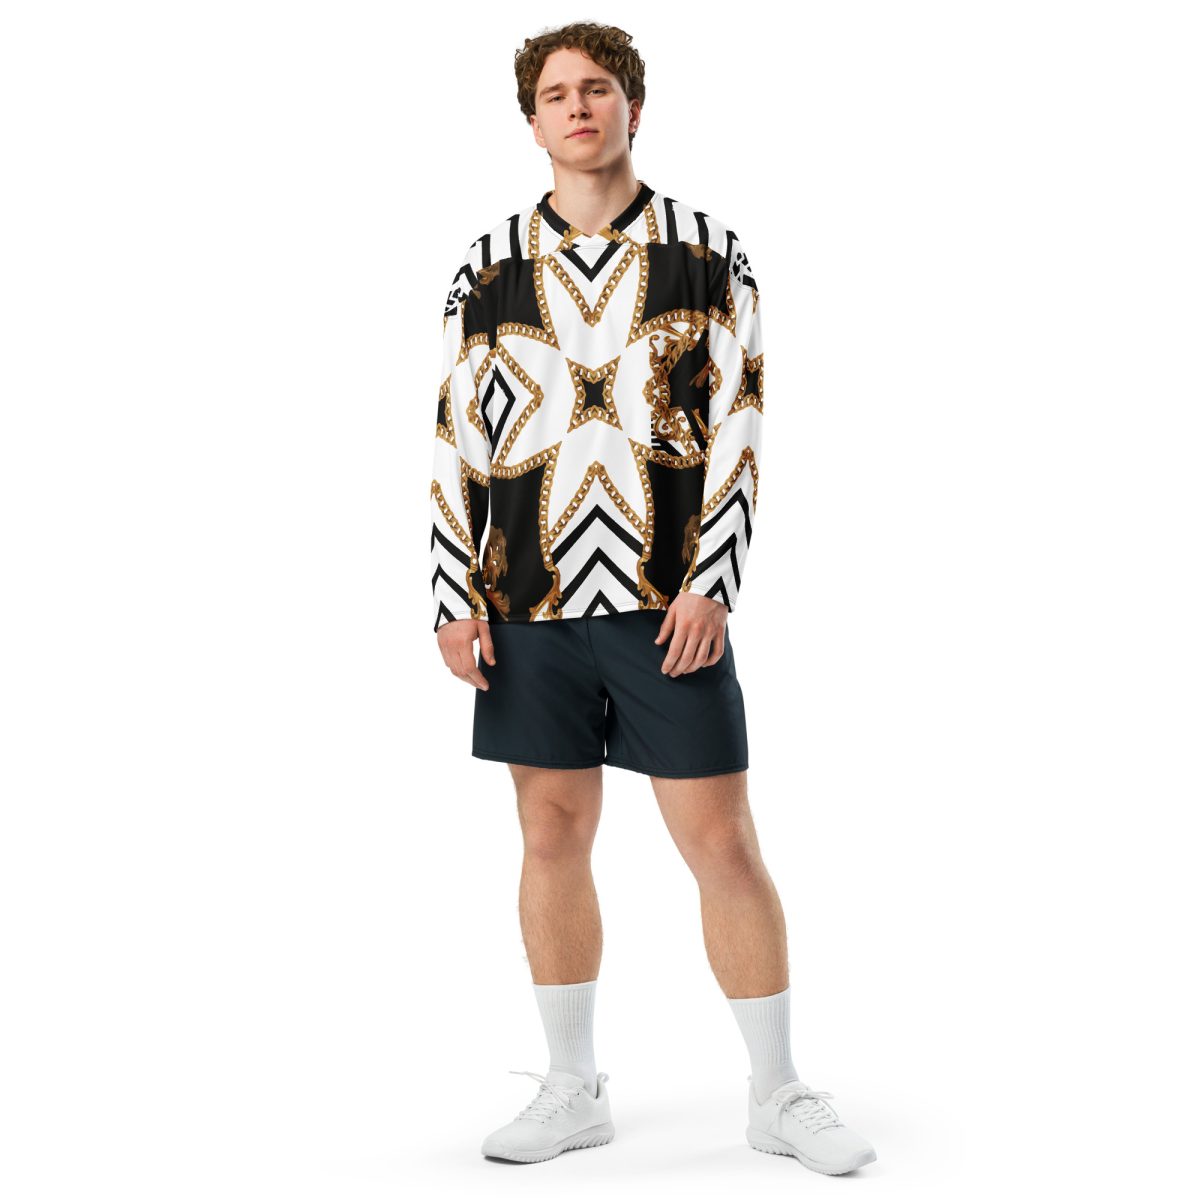 lakers shirt | celtics gear | pittsburgh penguins jersey